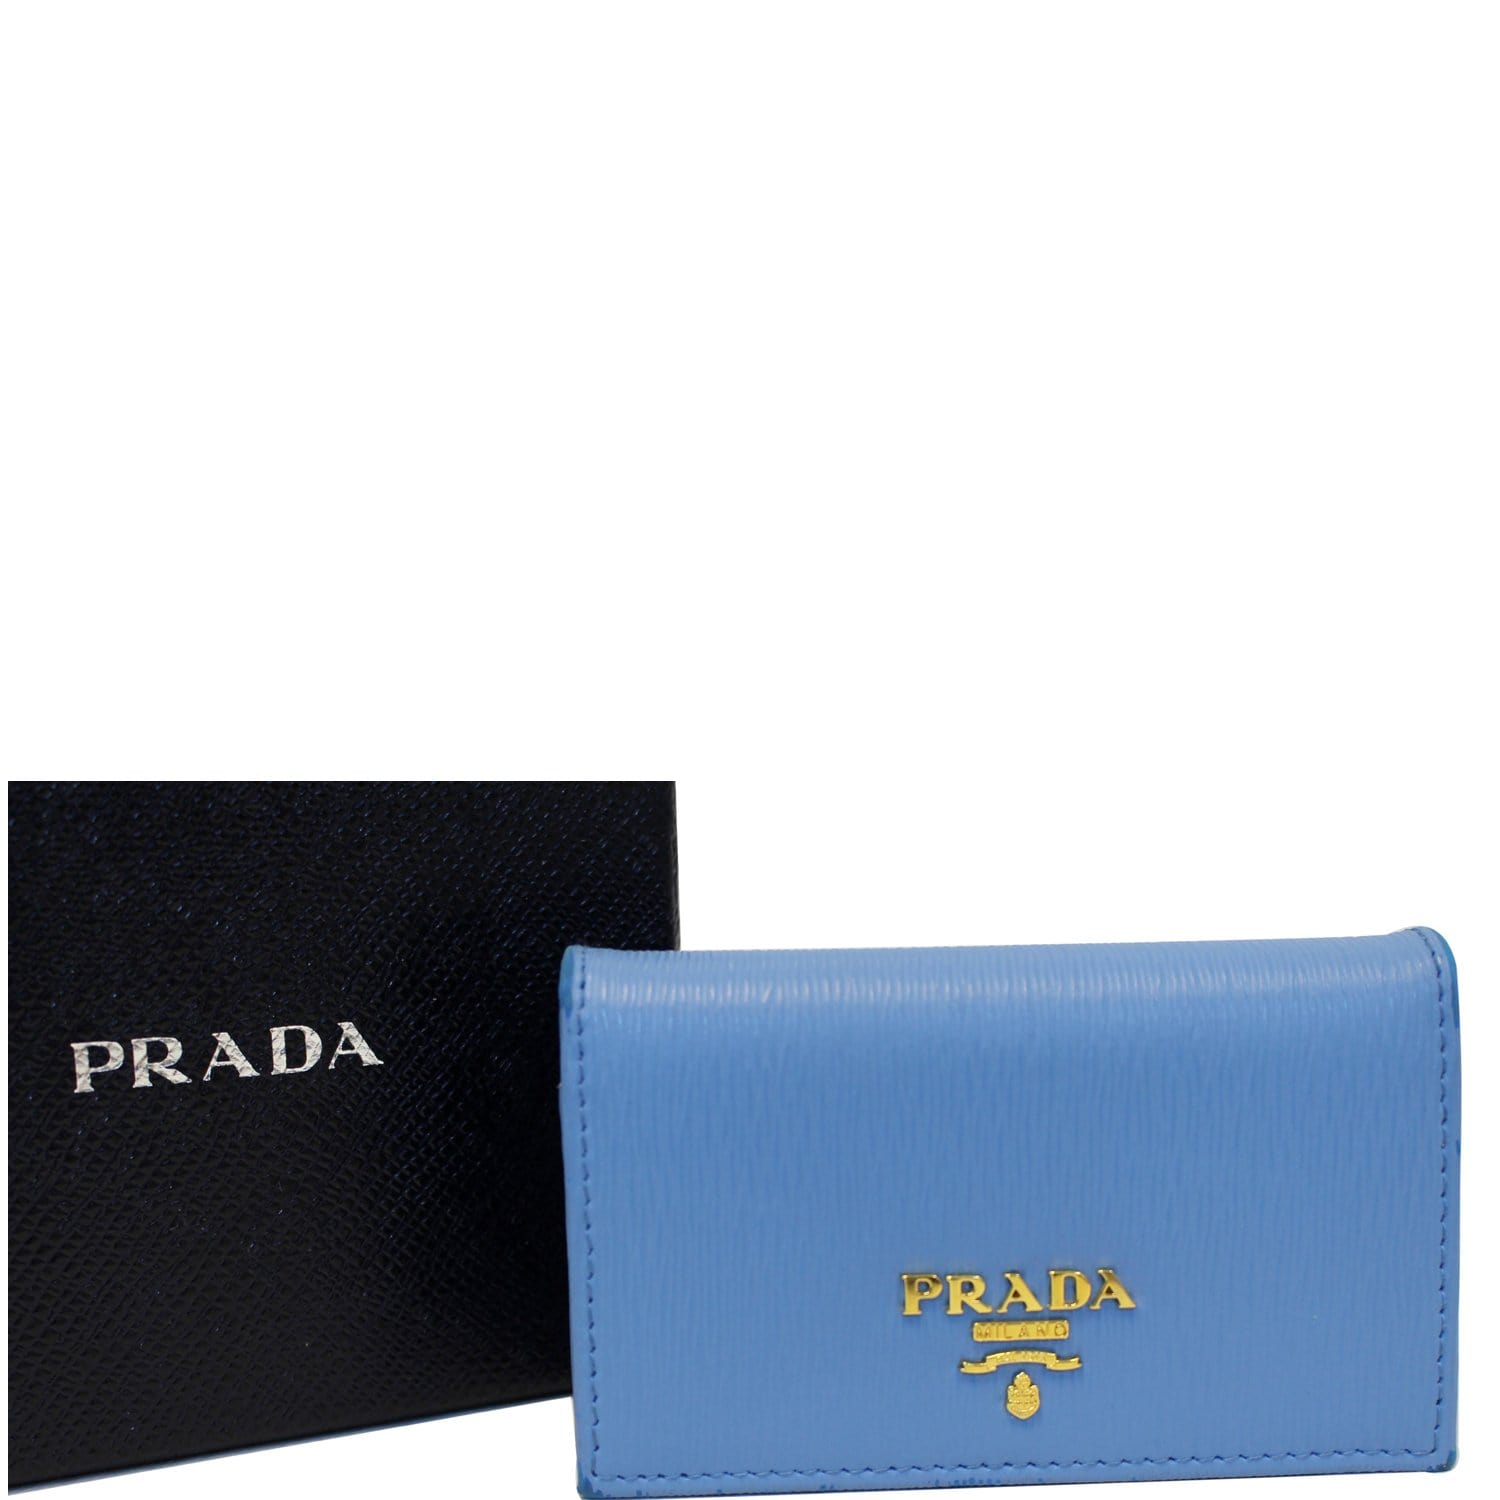 Light blue saffiano leather tri-fold wallet